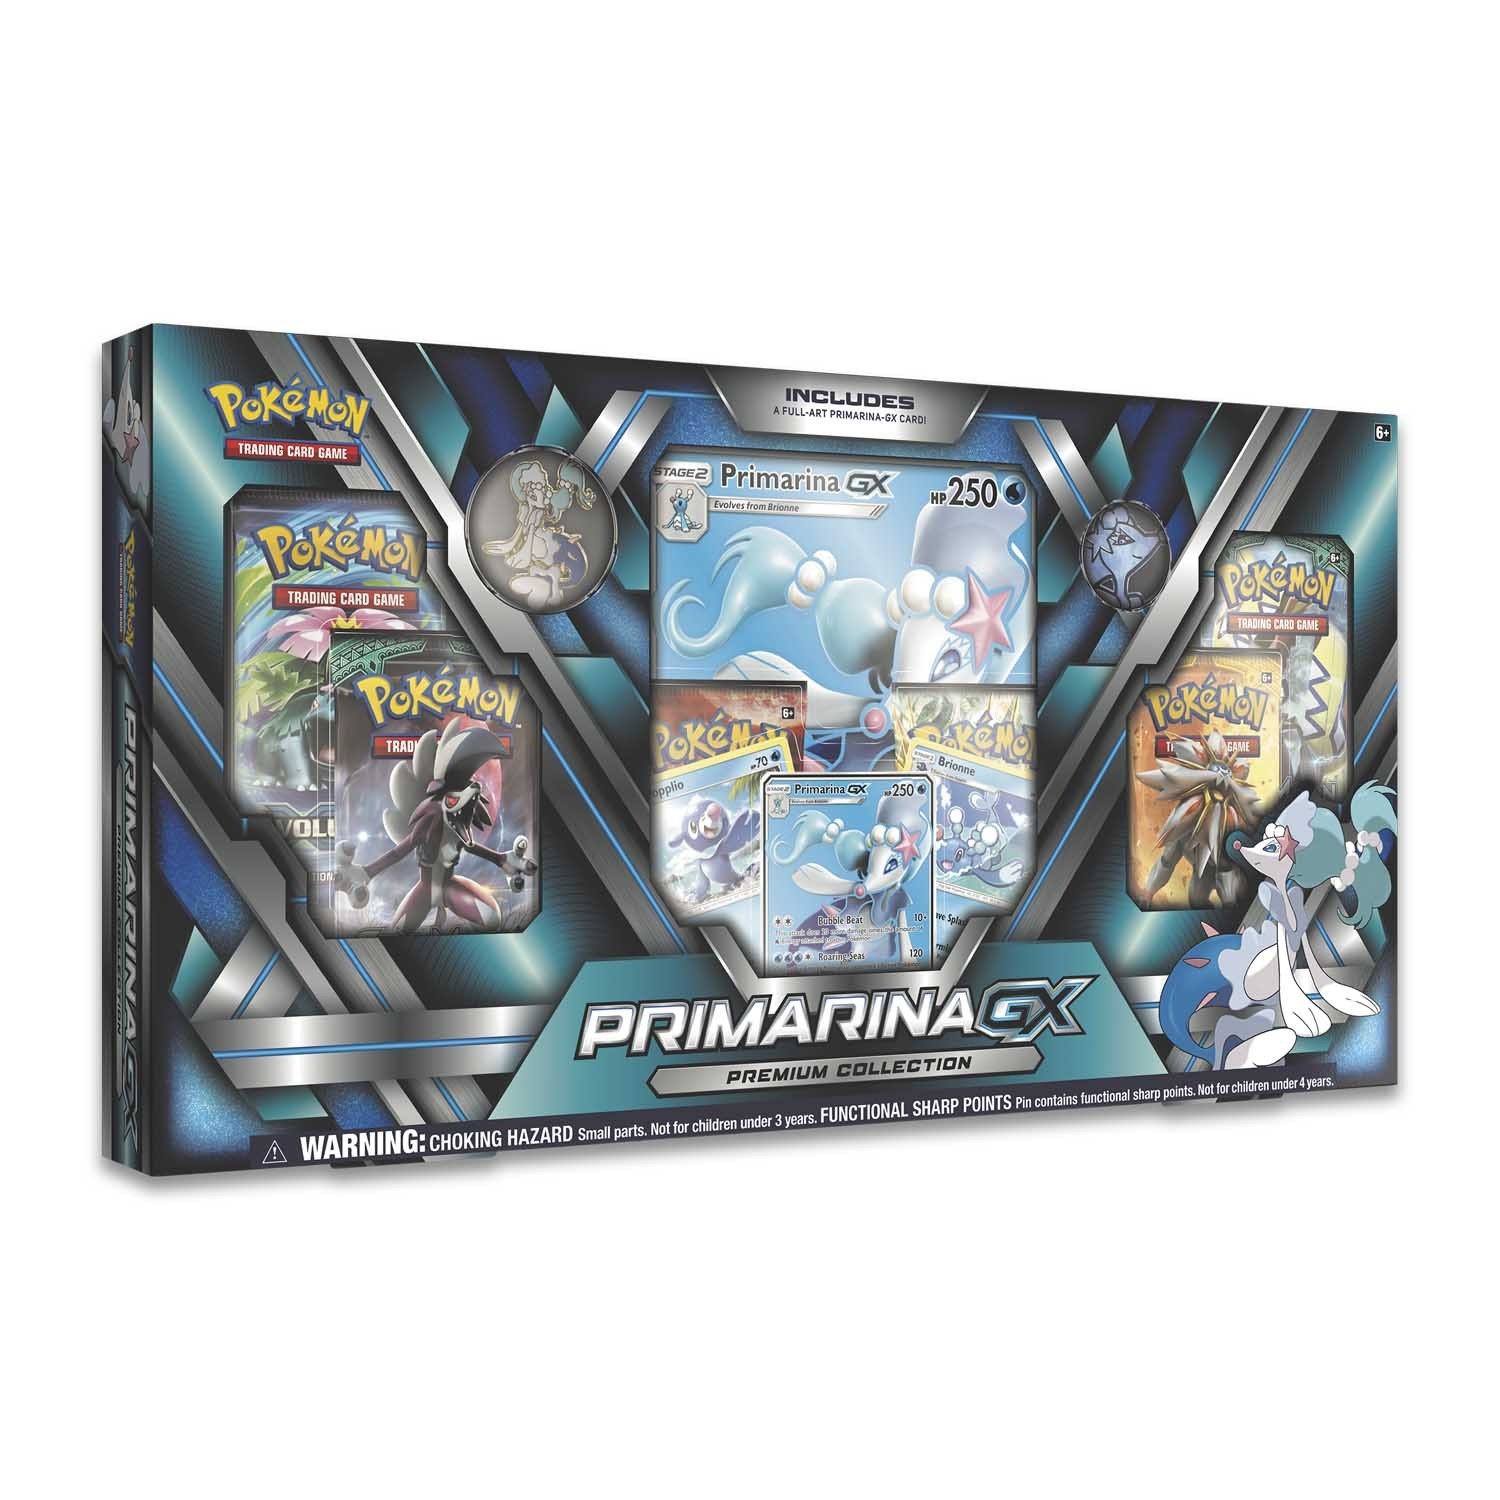 Pokémon TCG: Primarina-GX Premium Collection